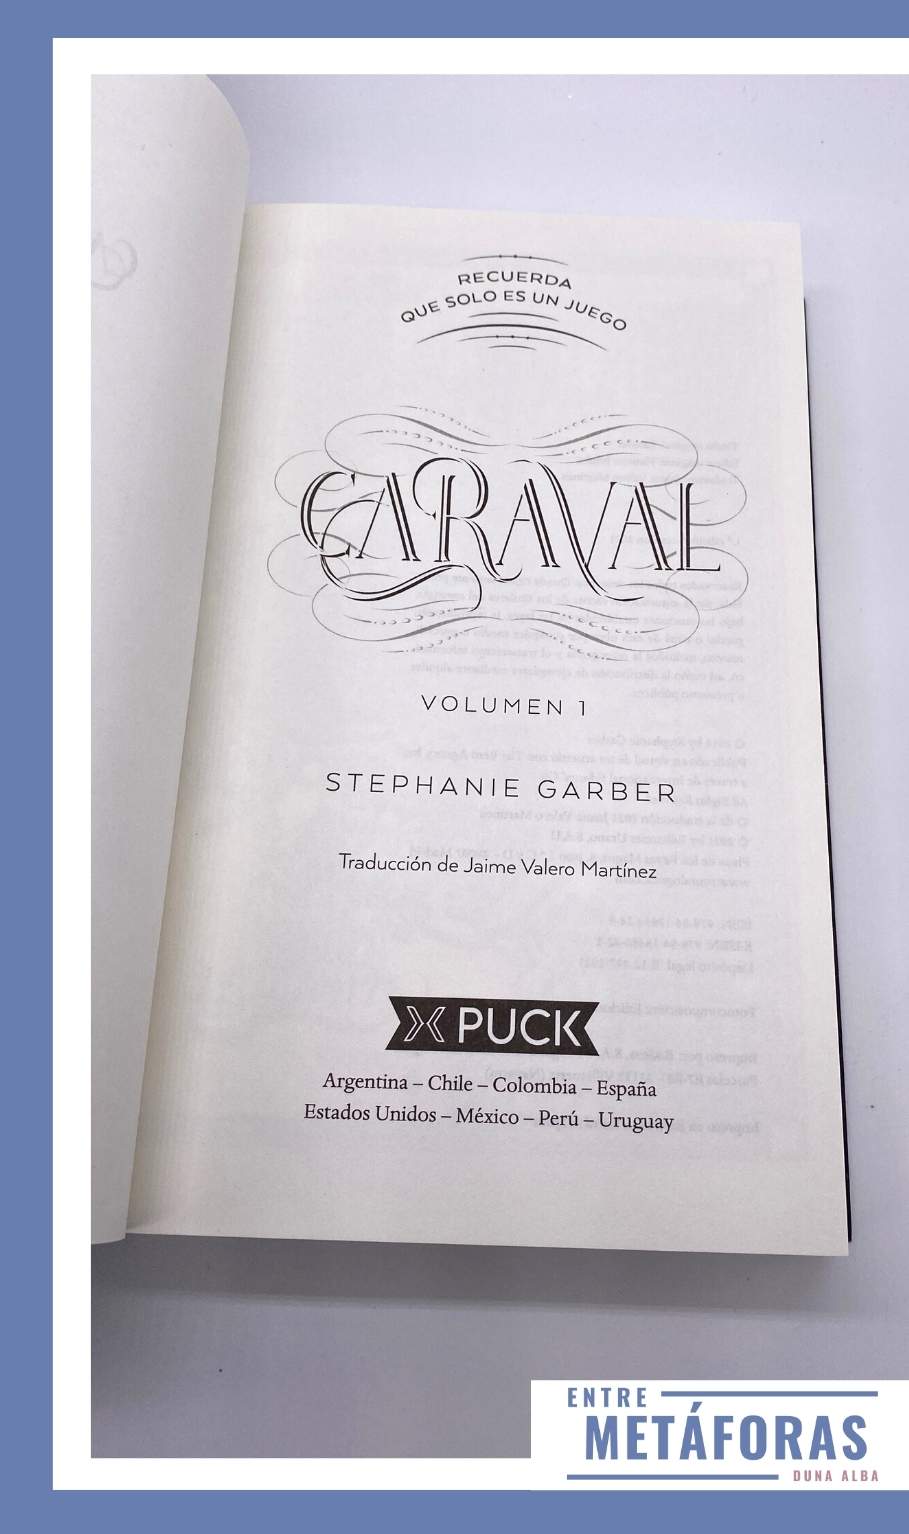 Caraval, de Stephanie Garber - Reseña